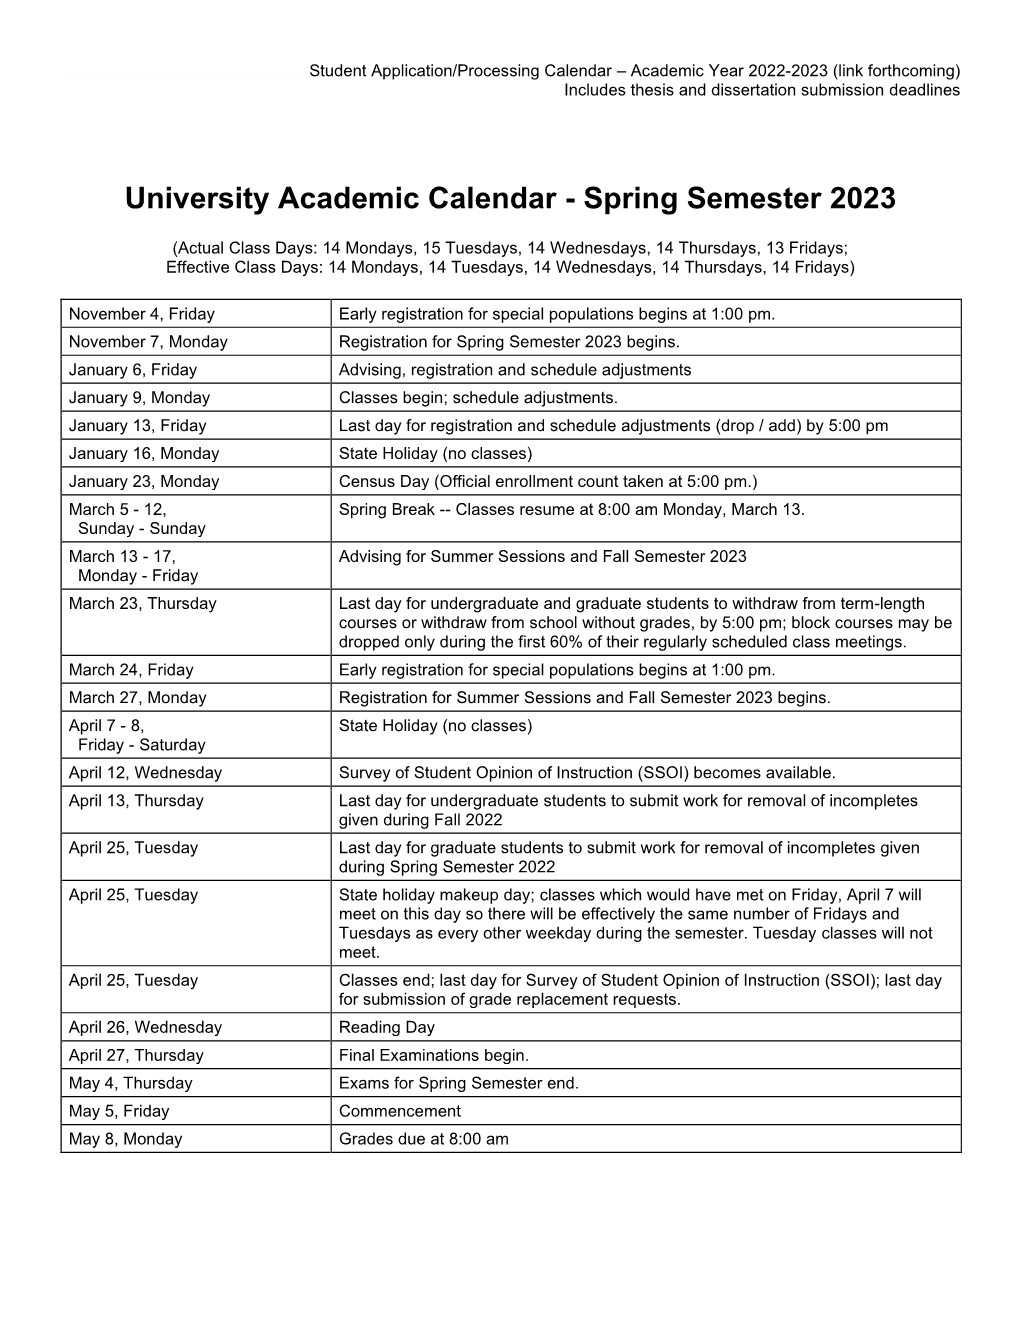 University Academic Calendar - Spring Semester 2023